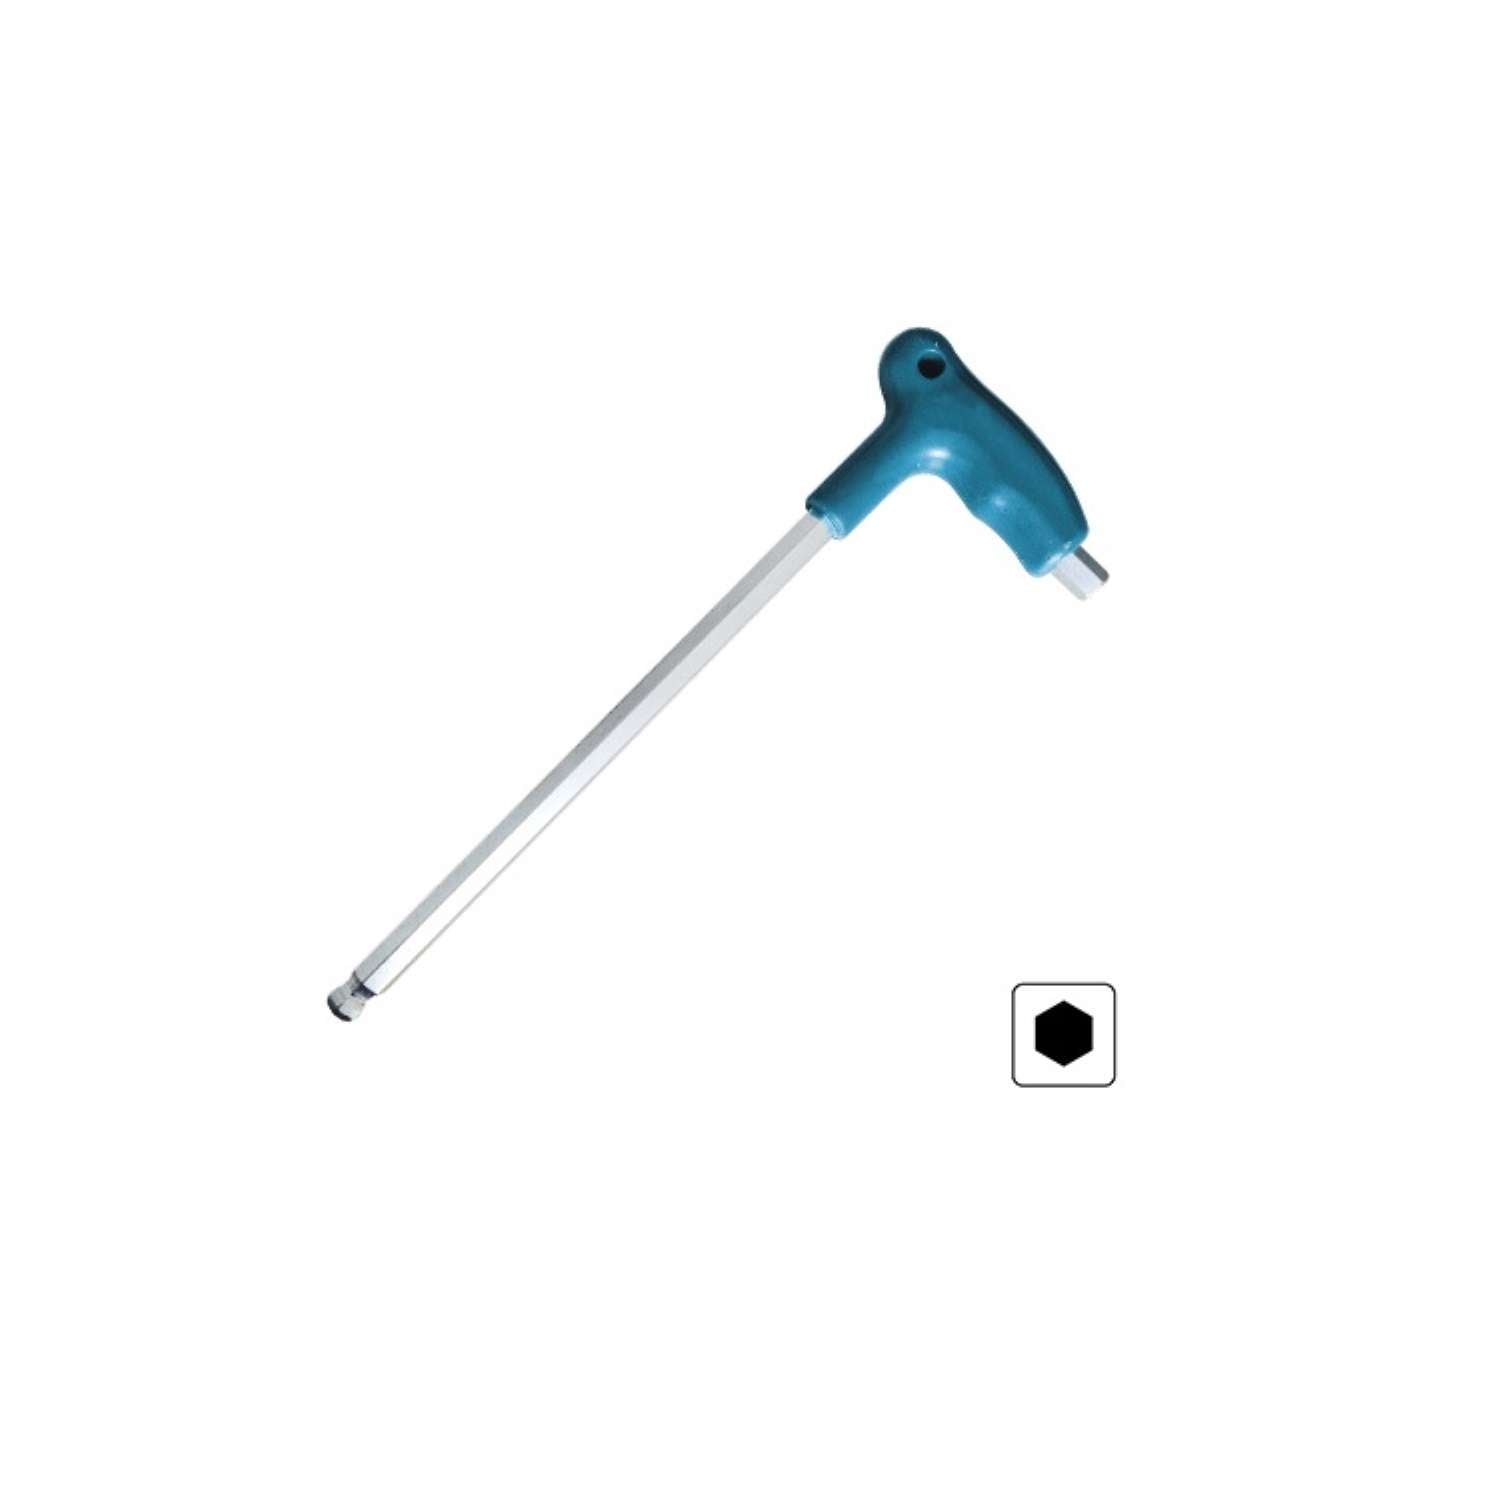 T-handle hex wrench ball end Allen chrome vanadium 2 x 200 mm - UM 20 H(020-120)